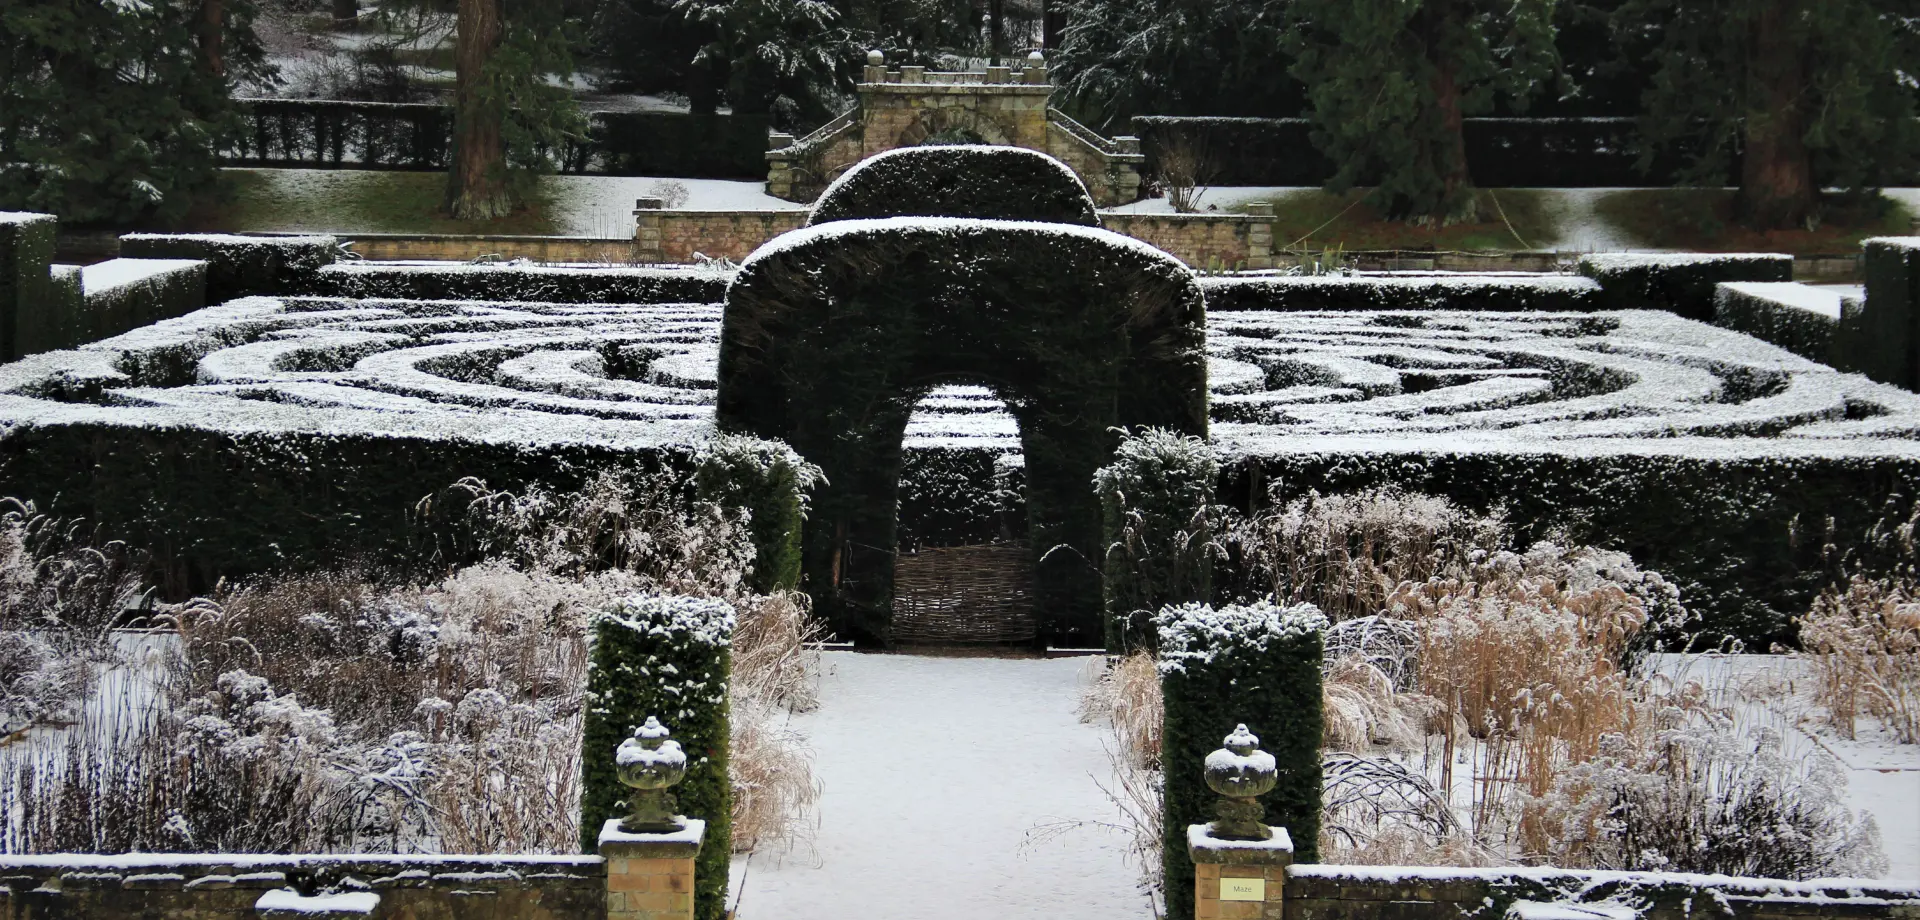 In the Chatsworth Garden: Winter